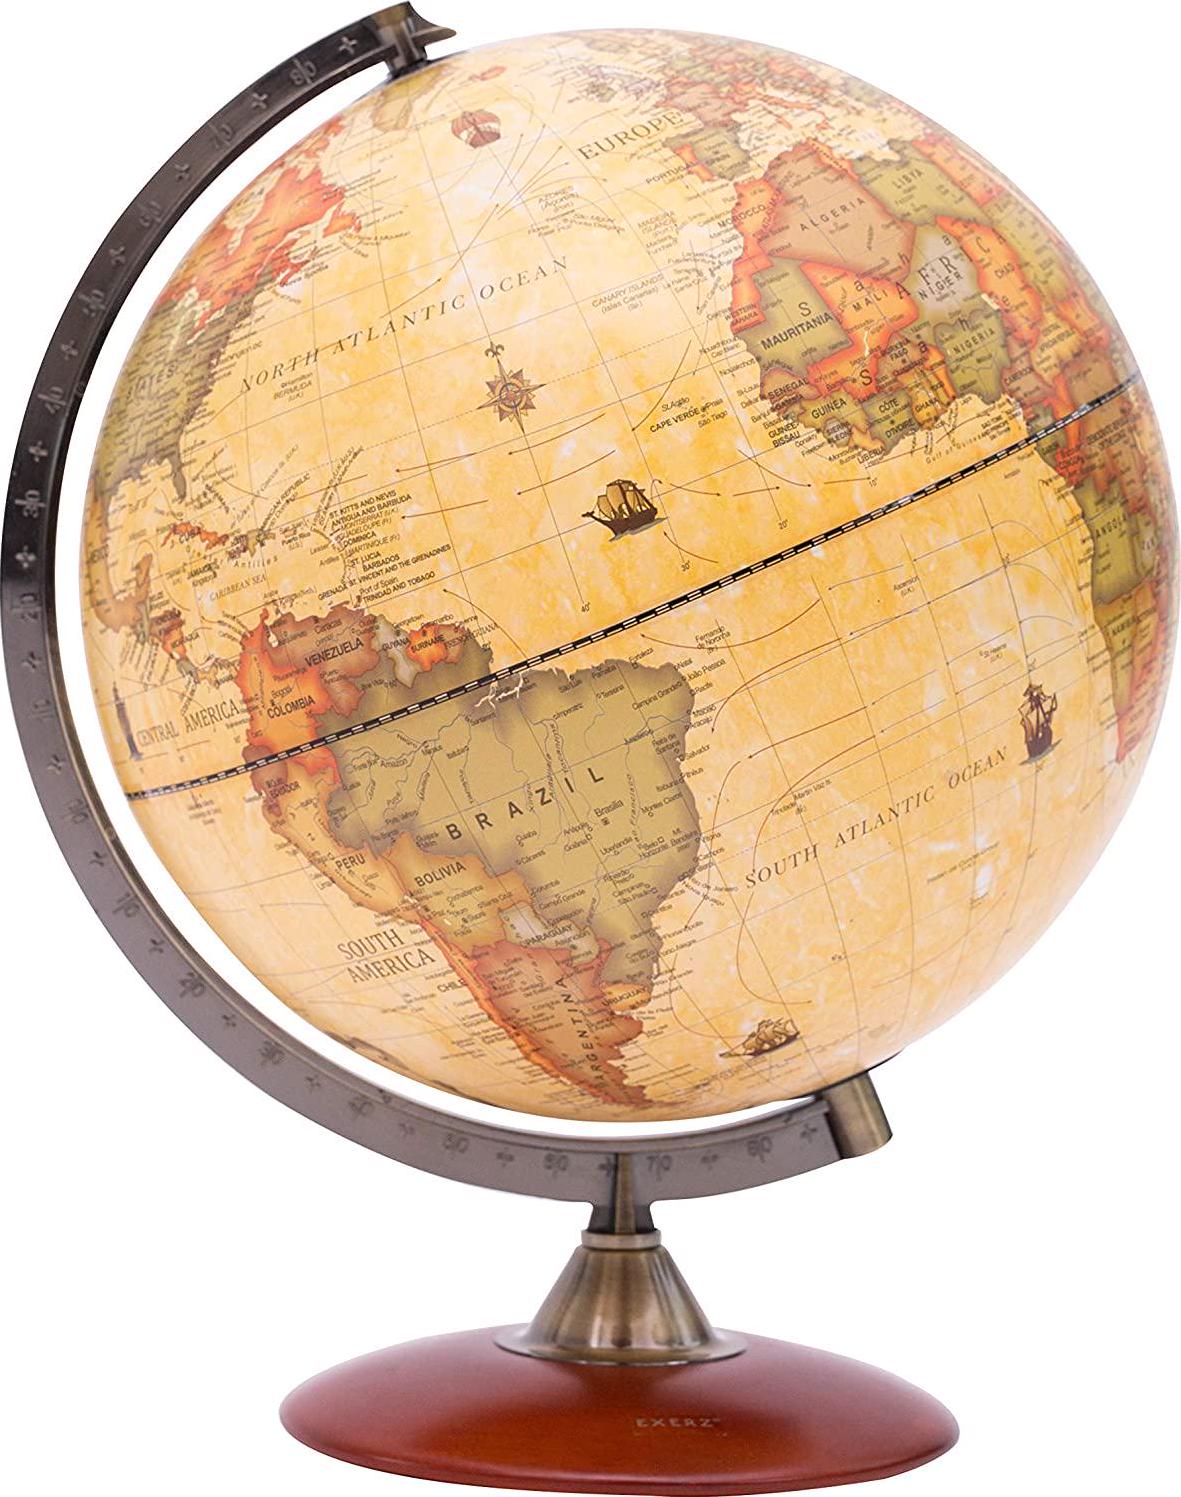 Exerz, Exerz 30cm Antique Globe with A Wood Base - World Globe Rotating Vintage Decorative 30cm Diametre